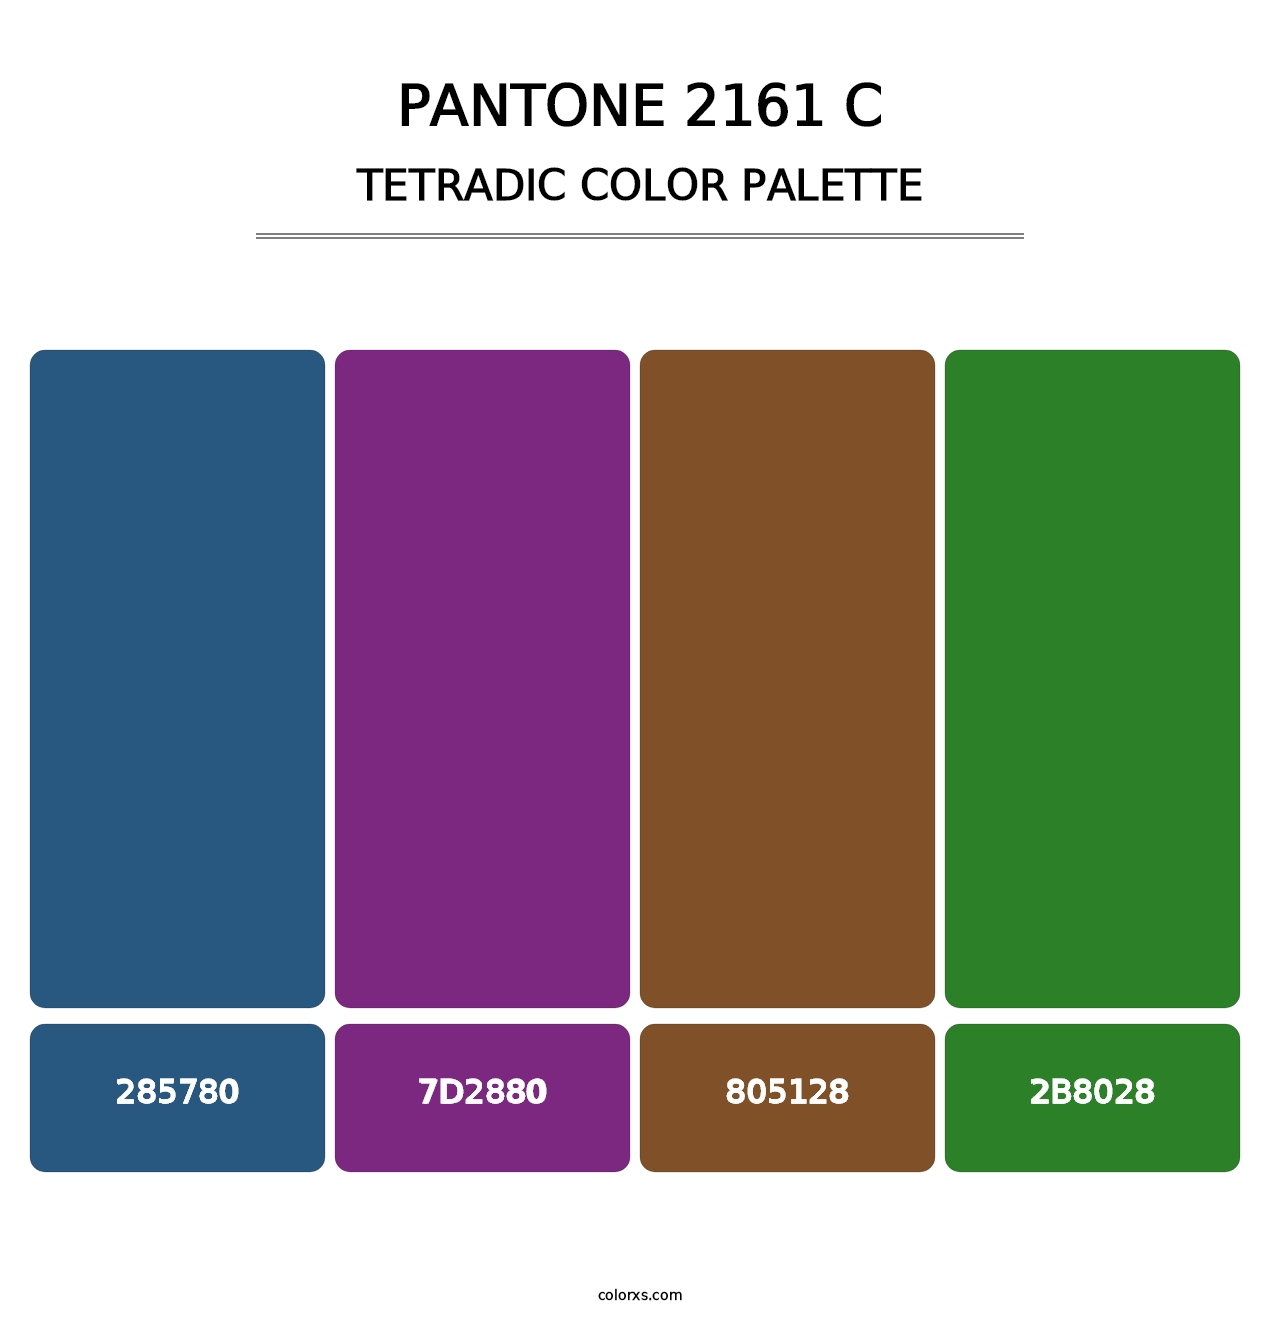 PANTONE 2161 C - Tetradic Color Palette